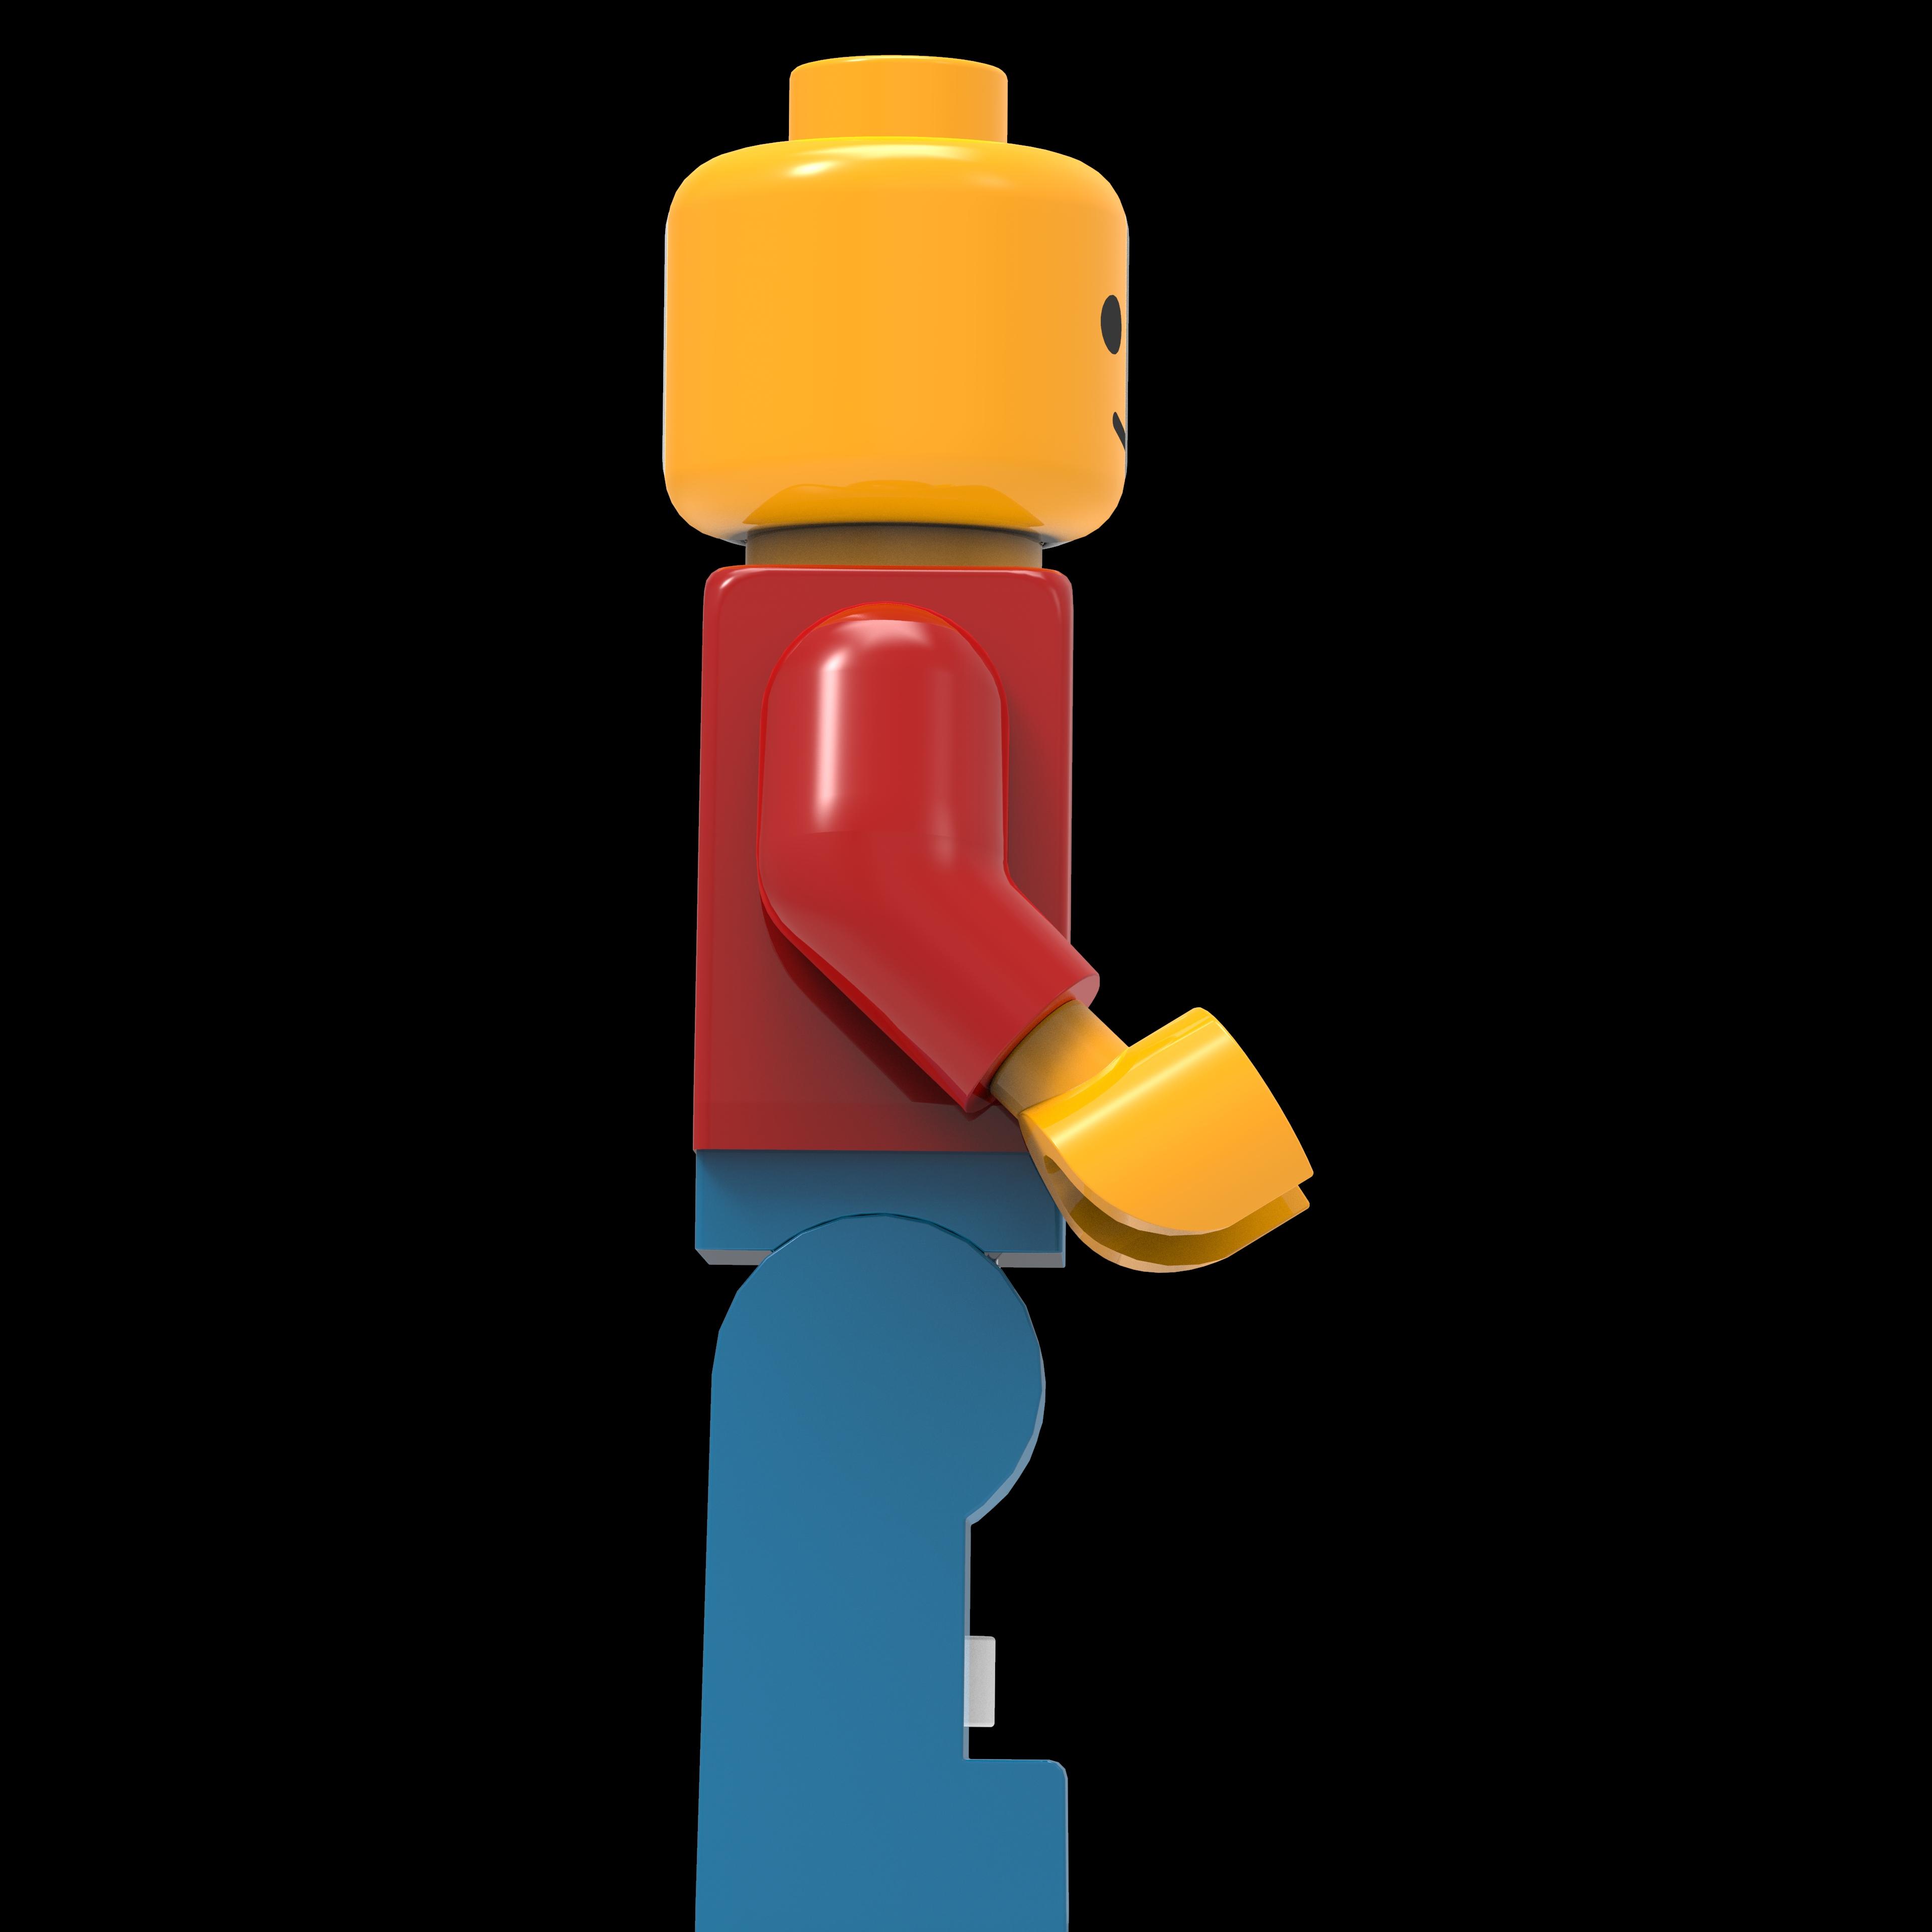 3D Lego Collection model - TurboSquid 1850102